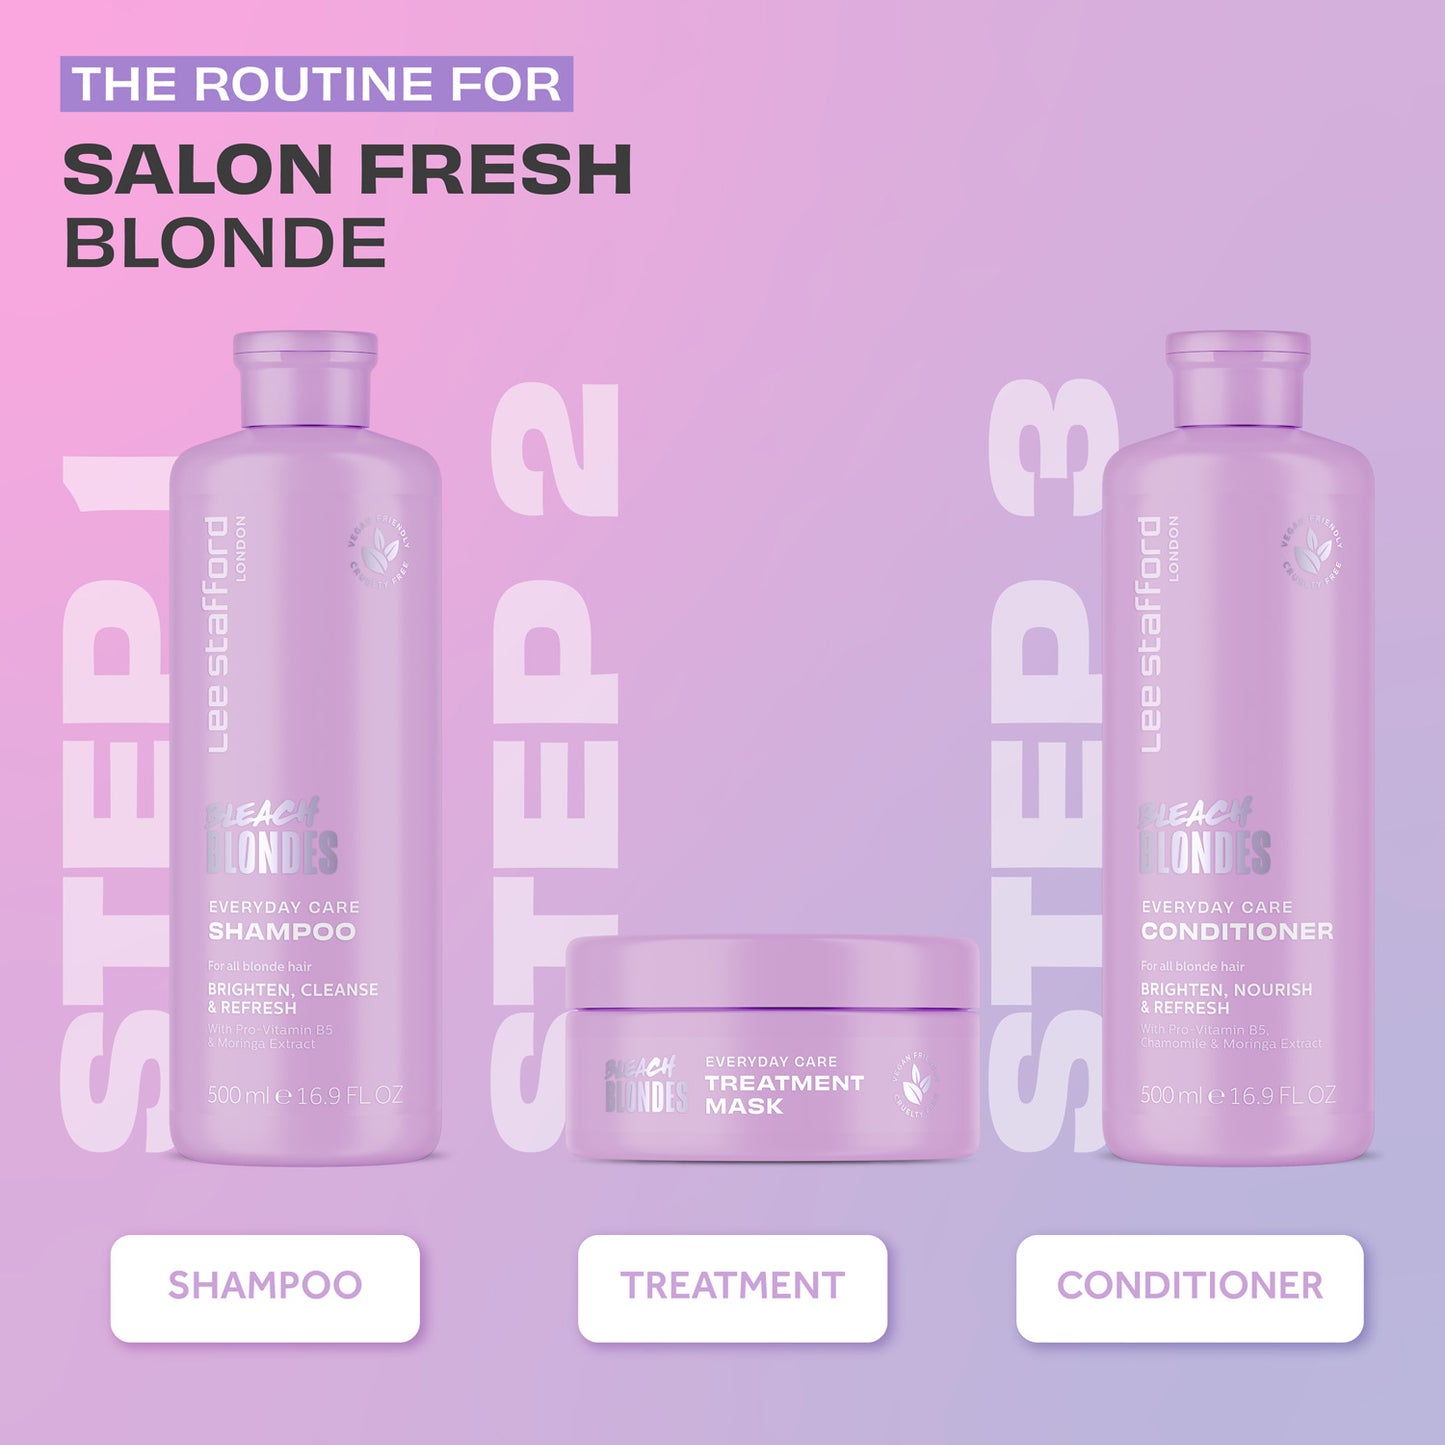 Bleach Blondes Everyday Care Shampoo